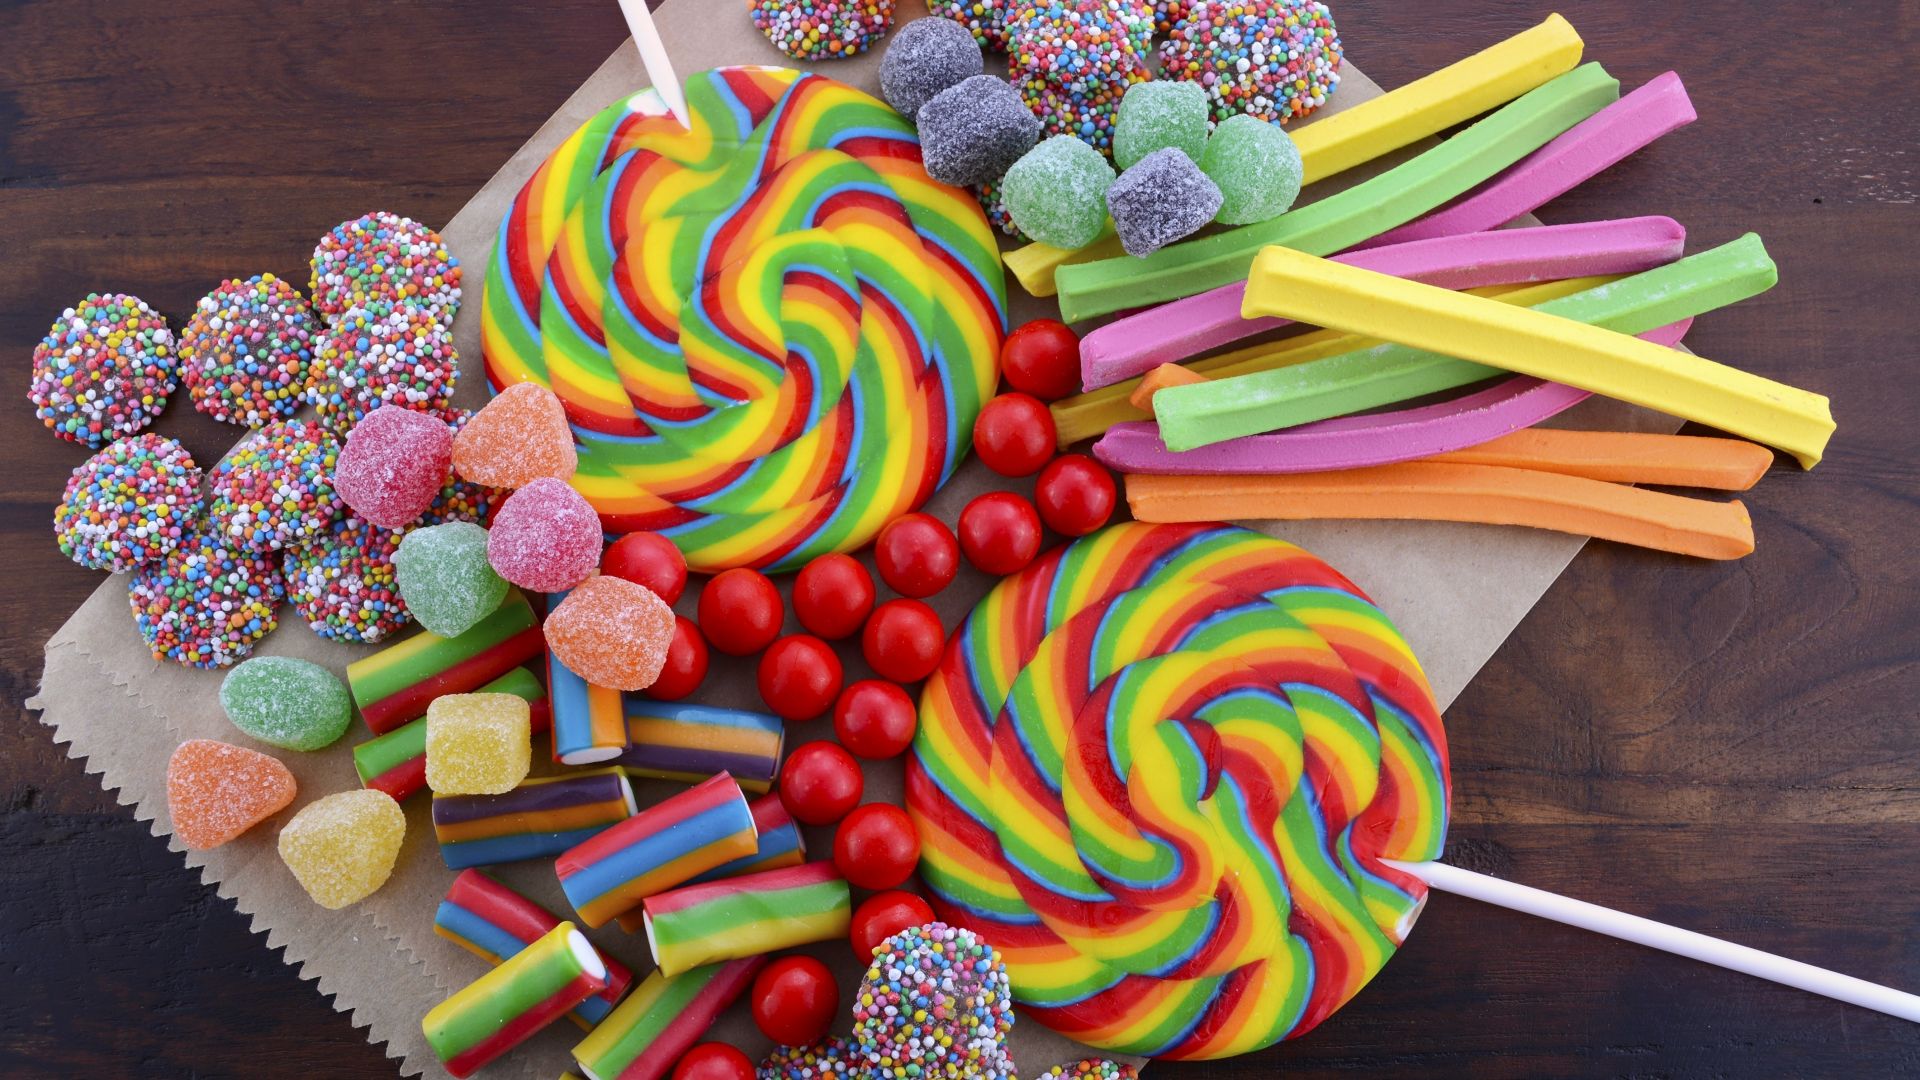 Desktop Wallpaper Colorful Lollipop Candies Sweets 4k Hd Image